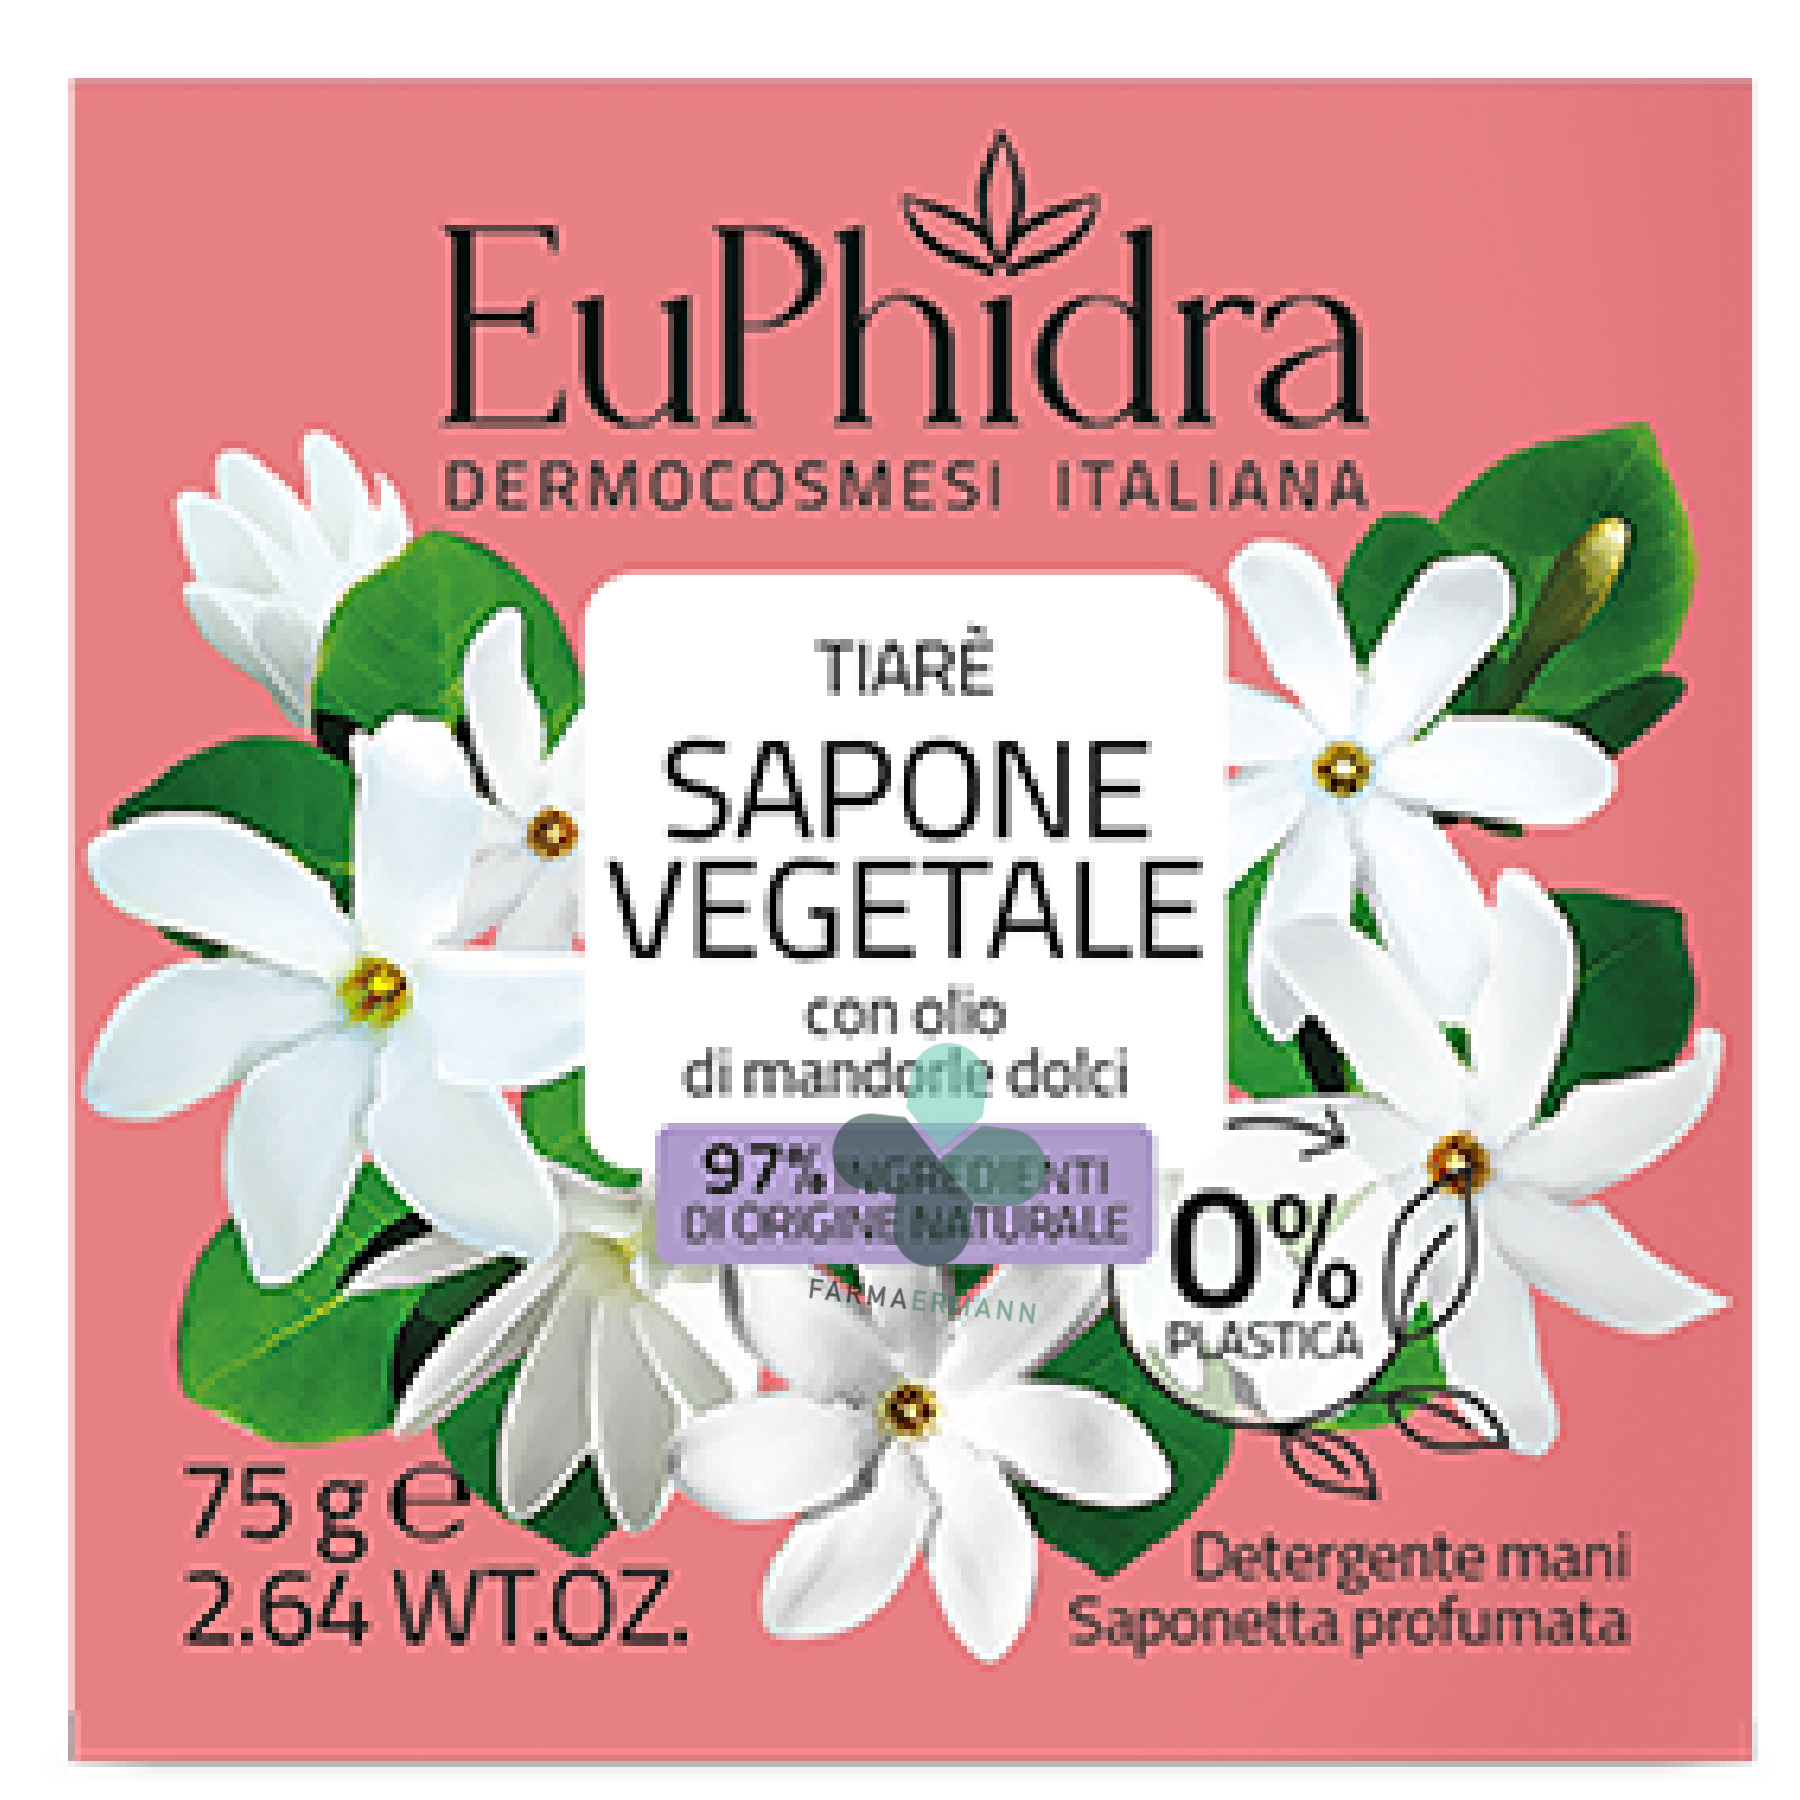 Euphidra Amidomio Crema Mani 50 Ml + Saponetta 100 G